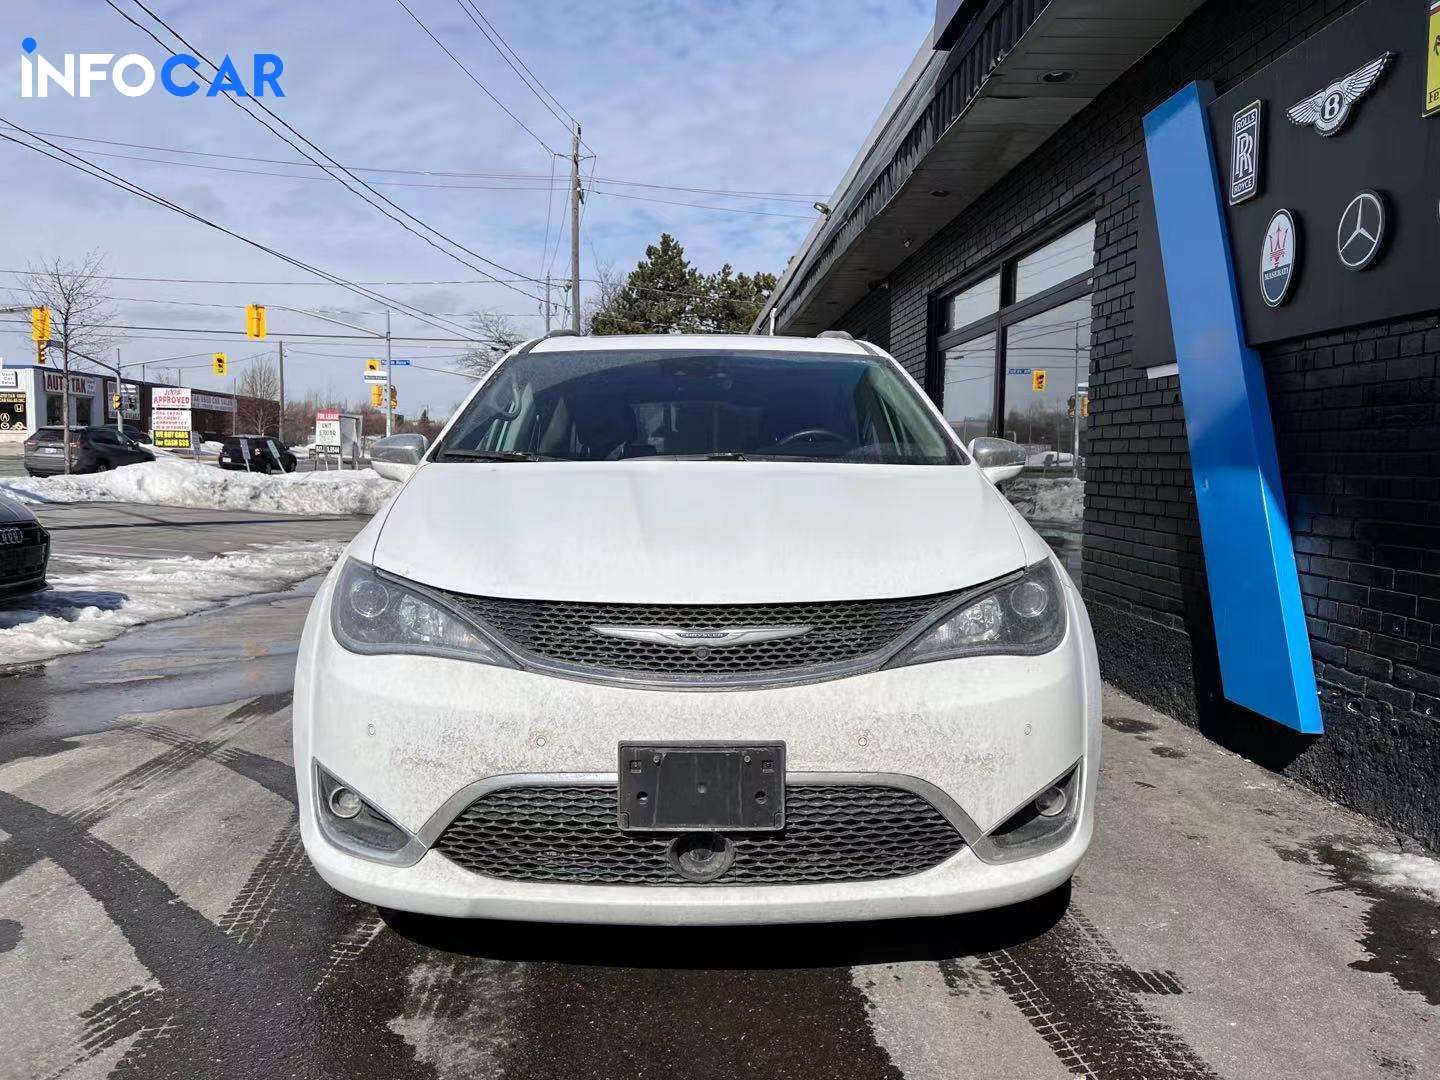 2019 Chrysler Pacifica null - INFOCAR - Toronto Auto Trading Platform